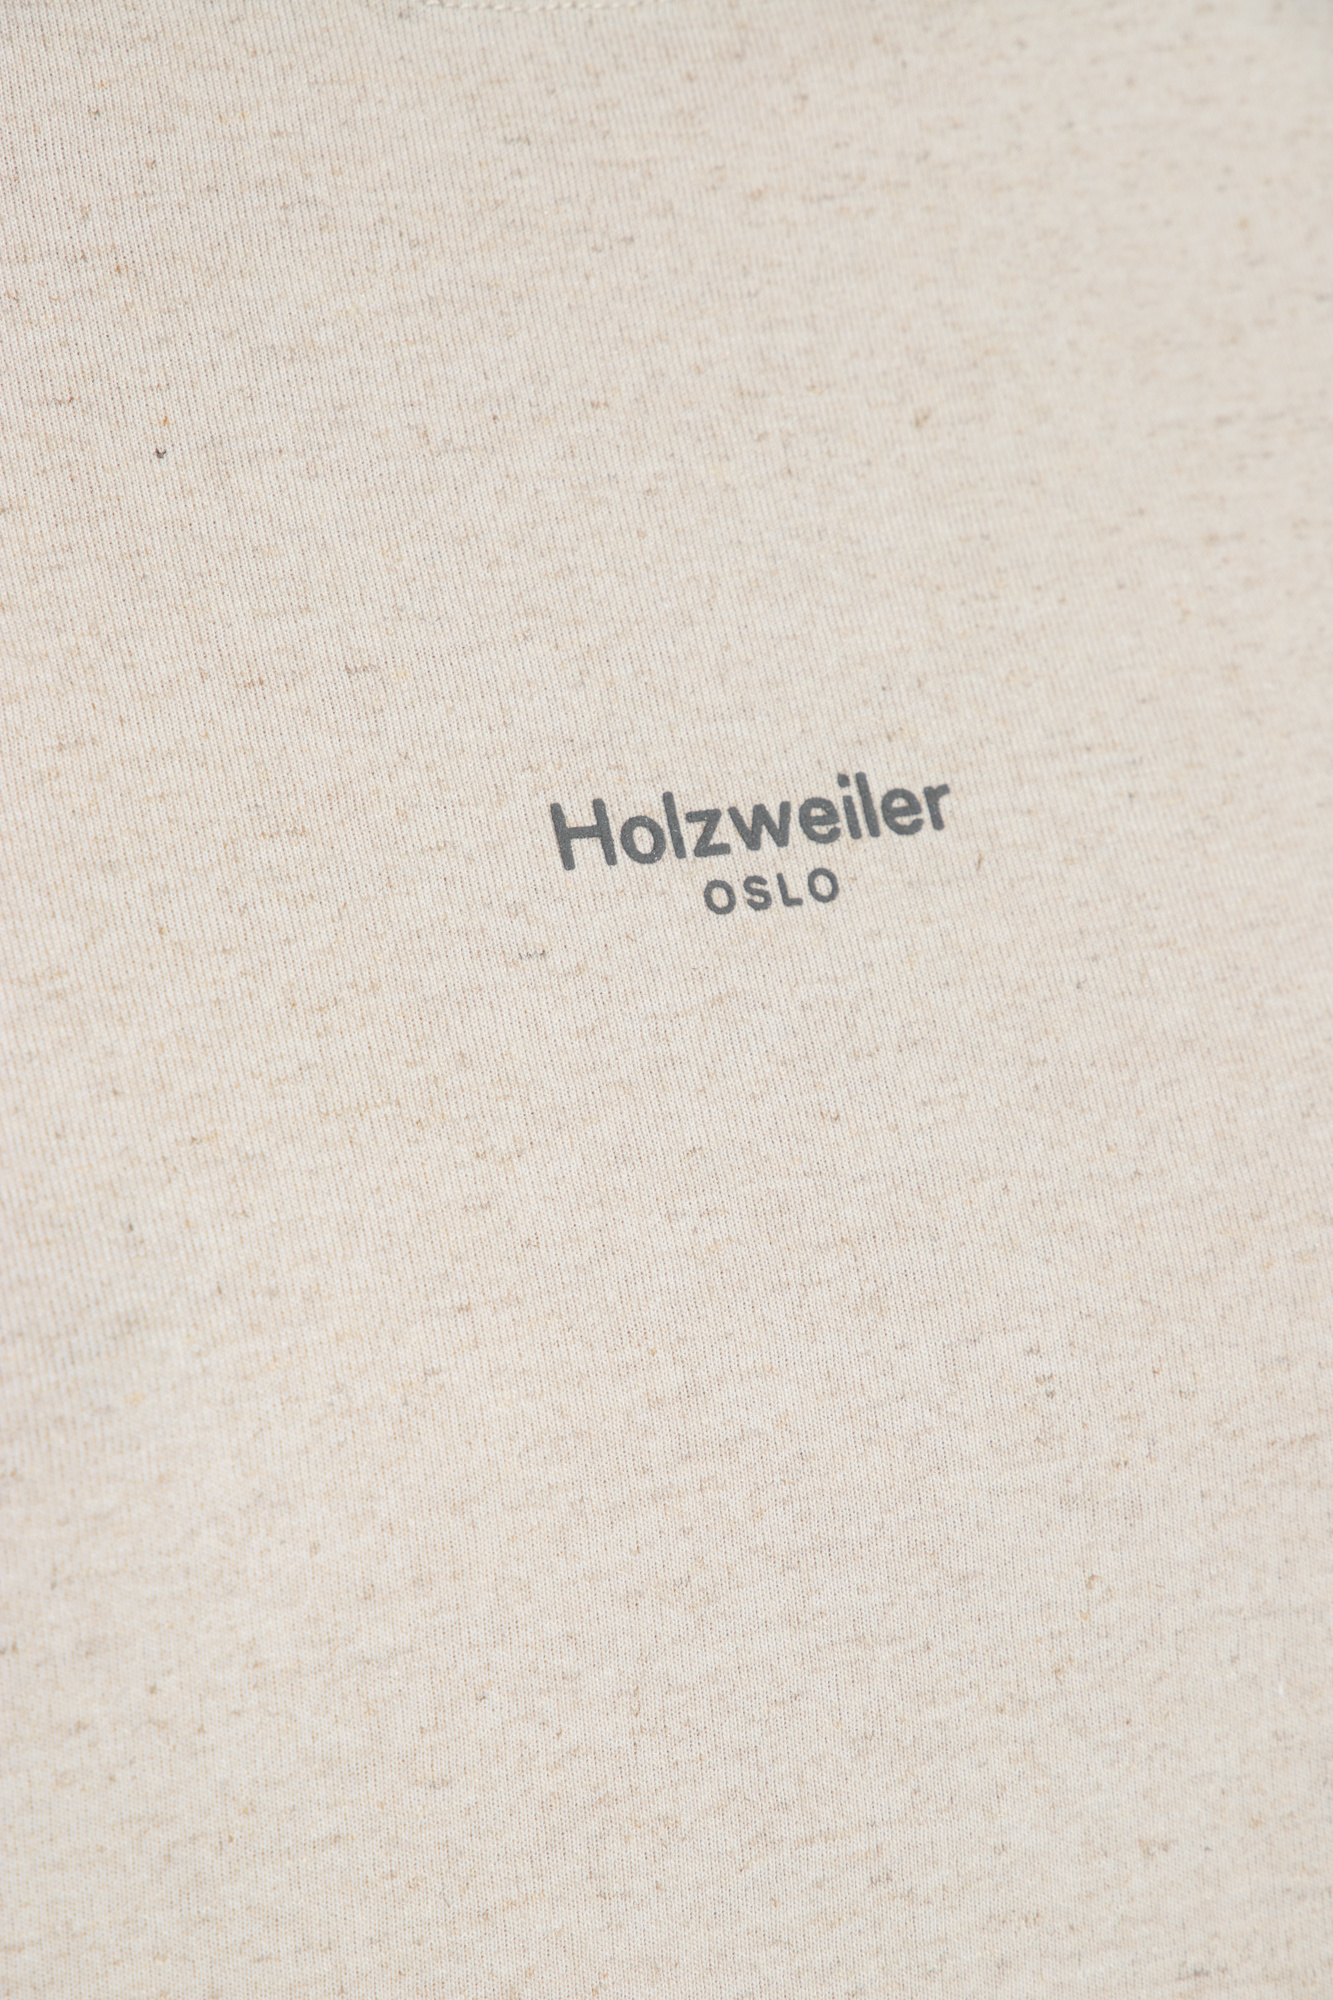 Holzweiler ‘Penny Oslo’ T-shirt